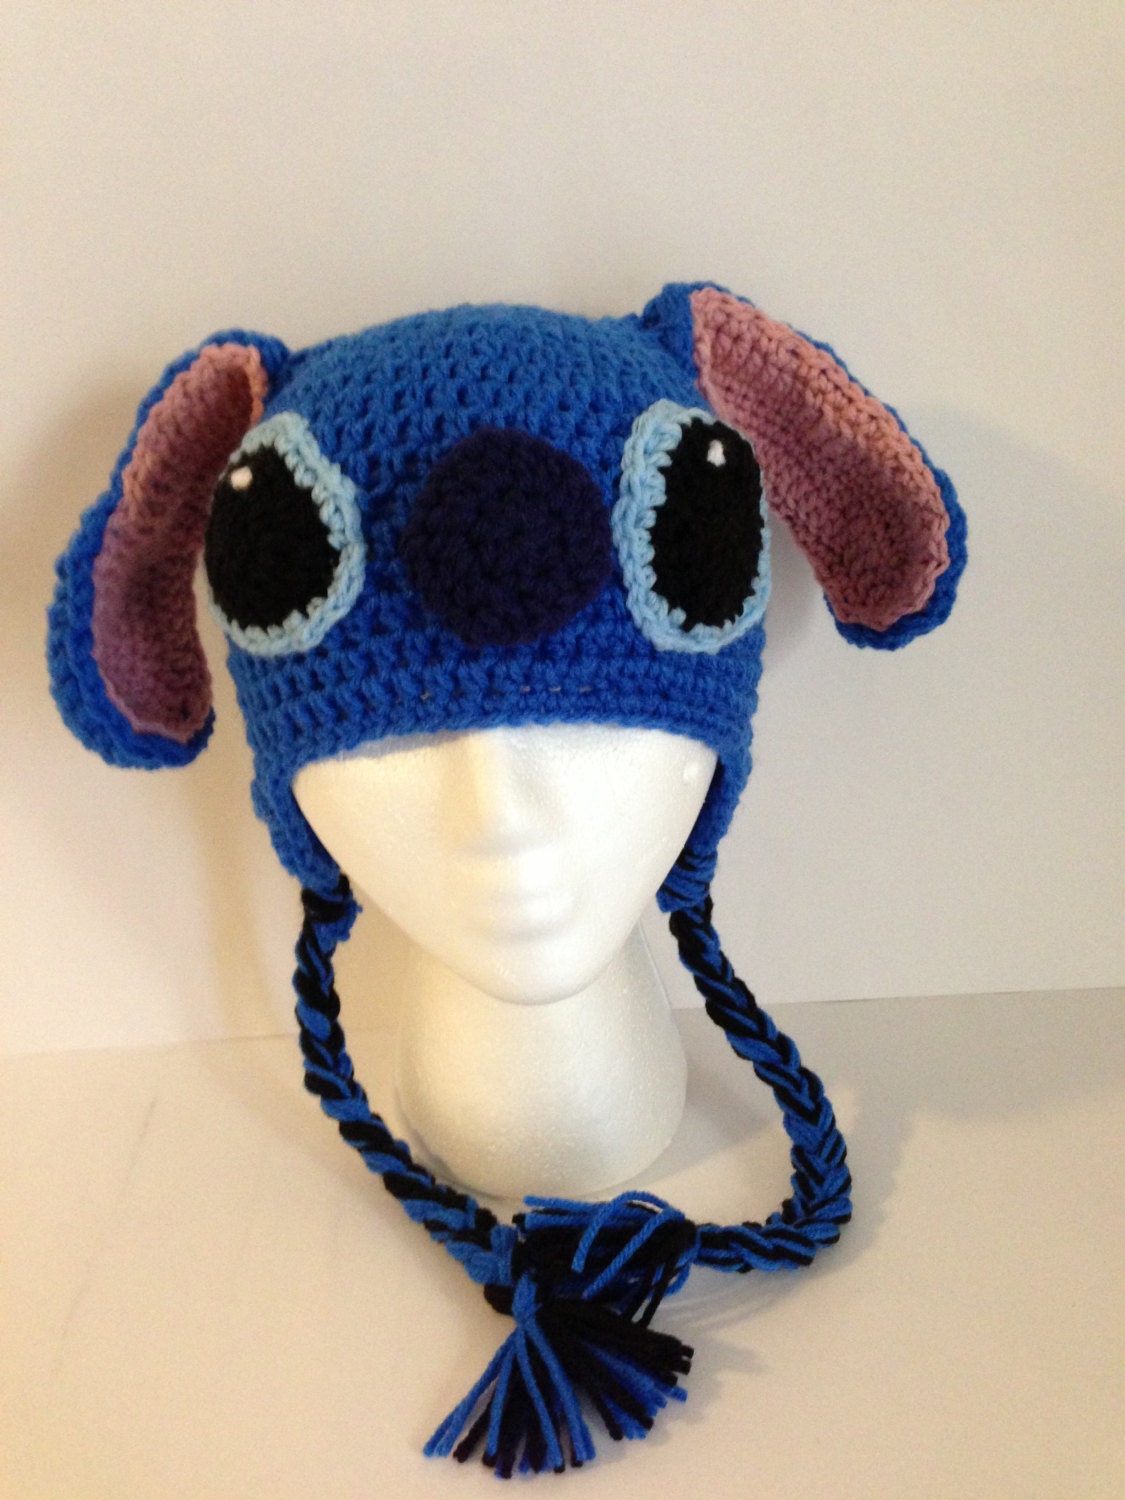 Angel Lilo and Stitch Hat, Stitch Hat, Stitch Angel Crochet Hat